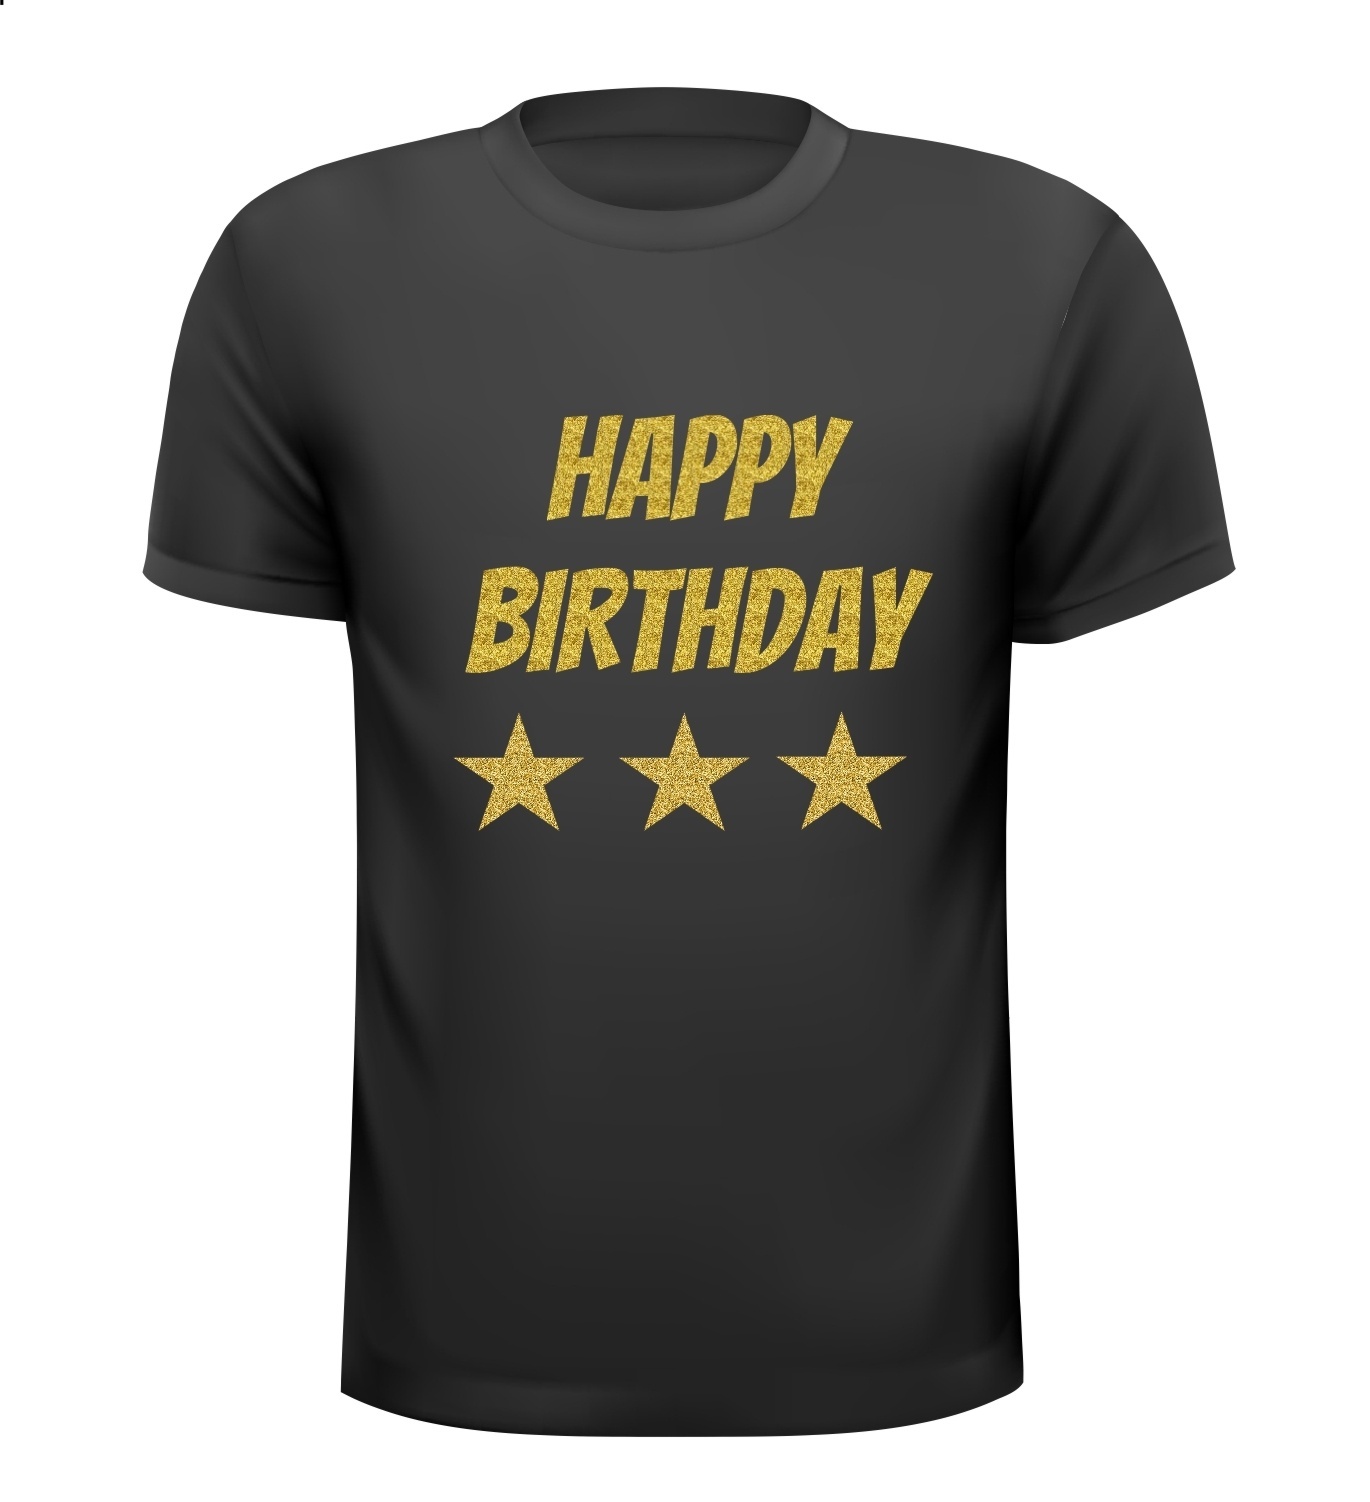 Happy birthday glitter T-shirt